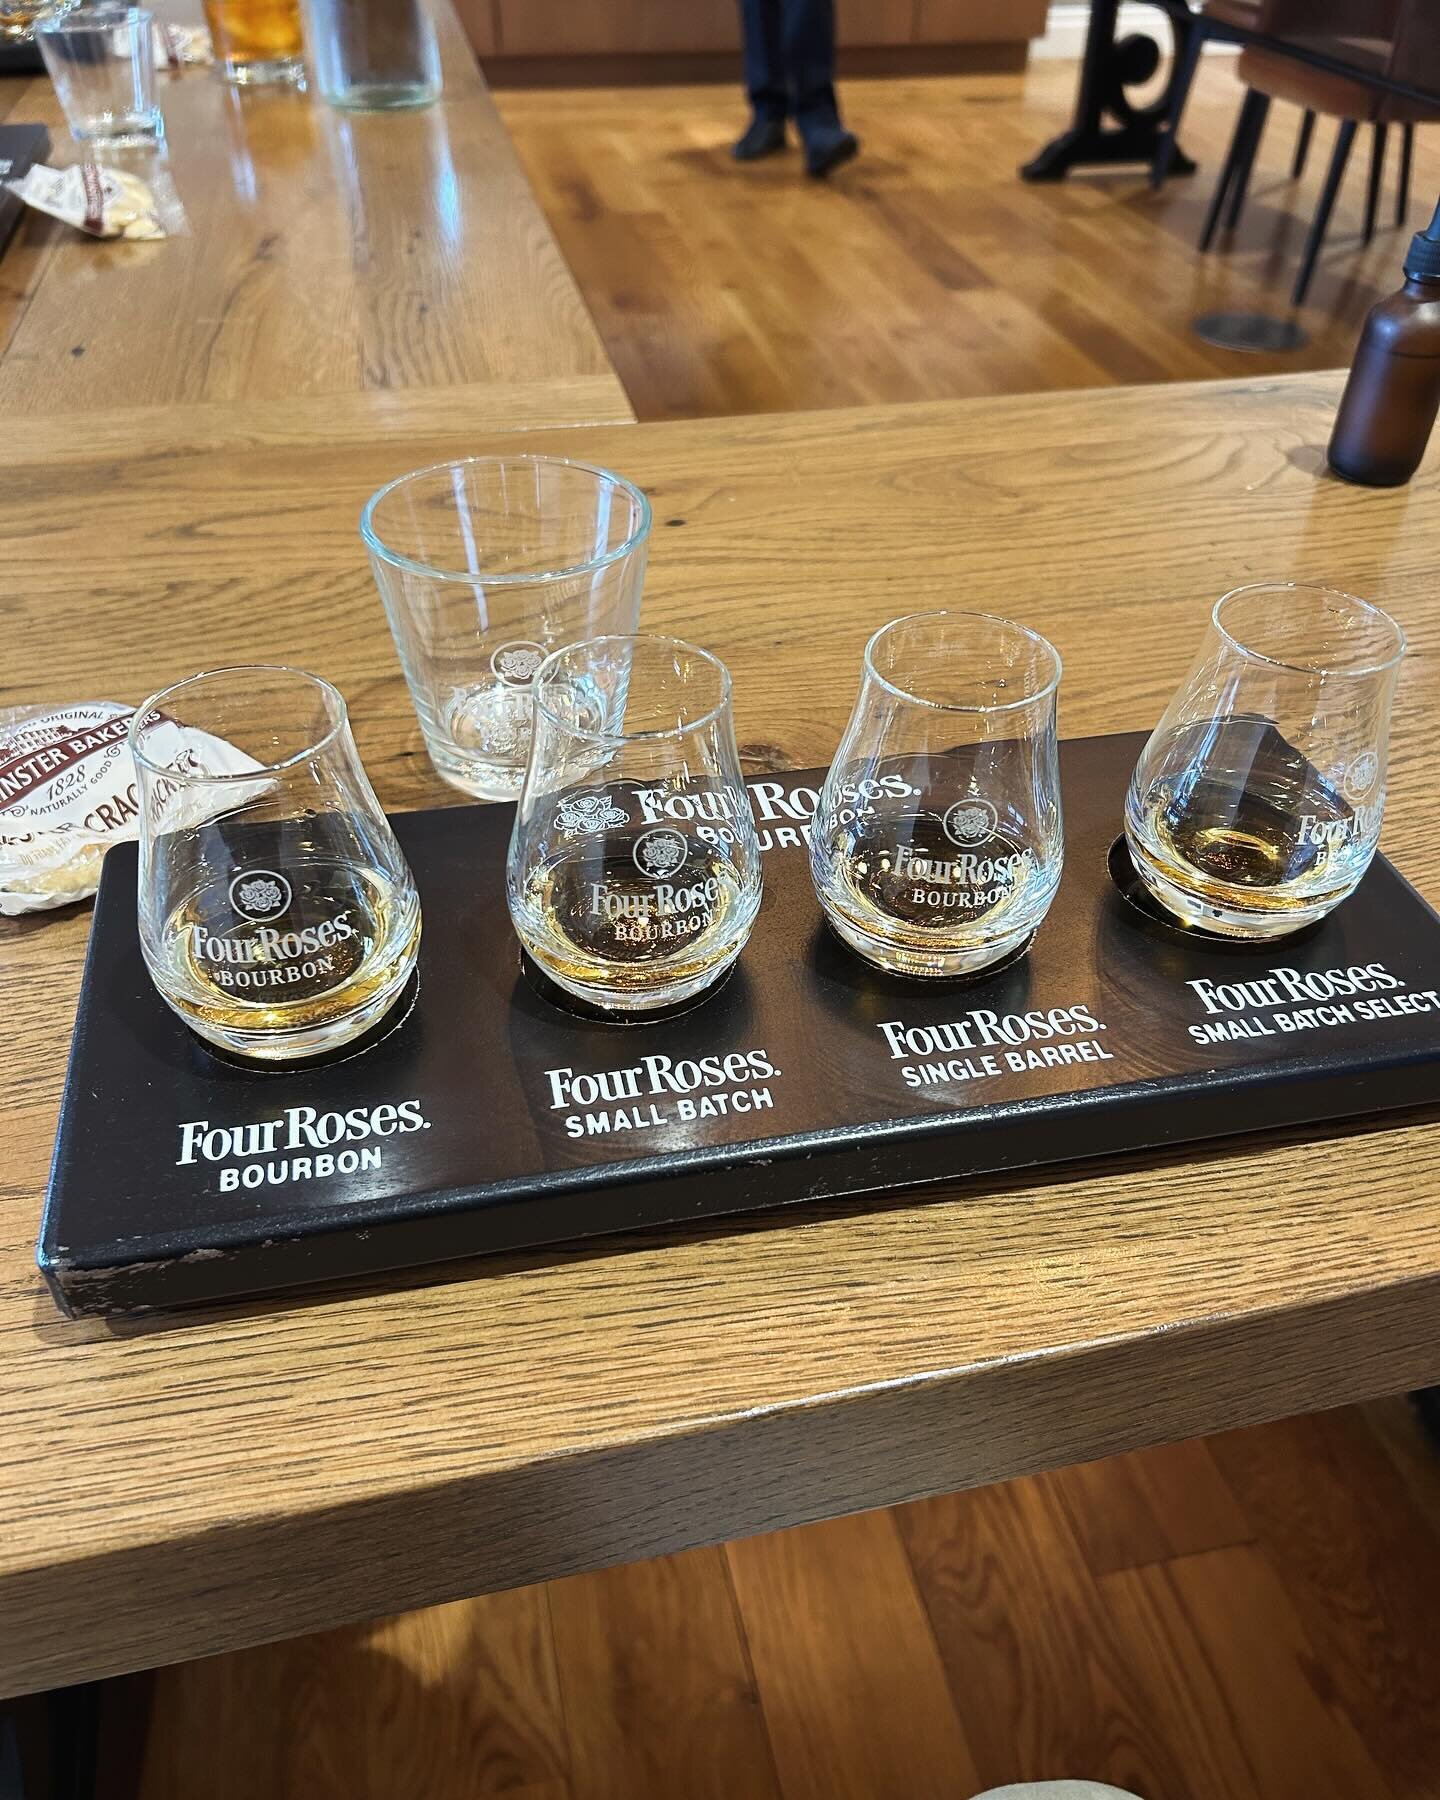 Amazing tasting experience!  Thanks Four Roses!  #kentuckybourbontrail #bourbon #bourbon-whiskey #liquidgold #bourbongram #whiskey #whisky #whiskeyandwatches
#fourroses